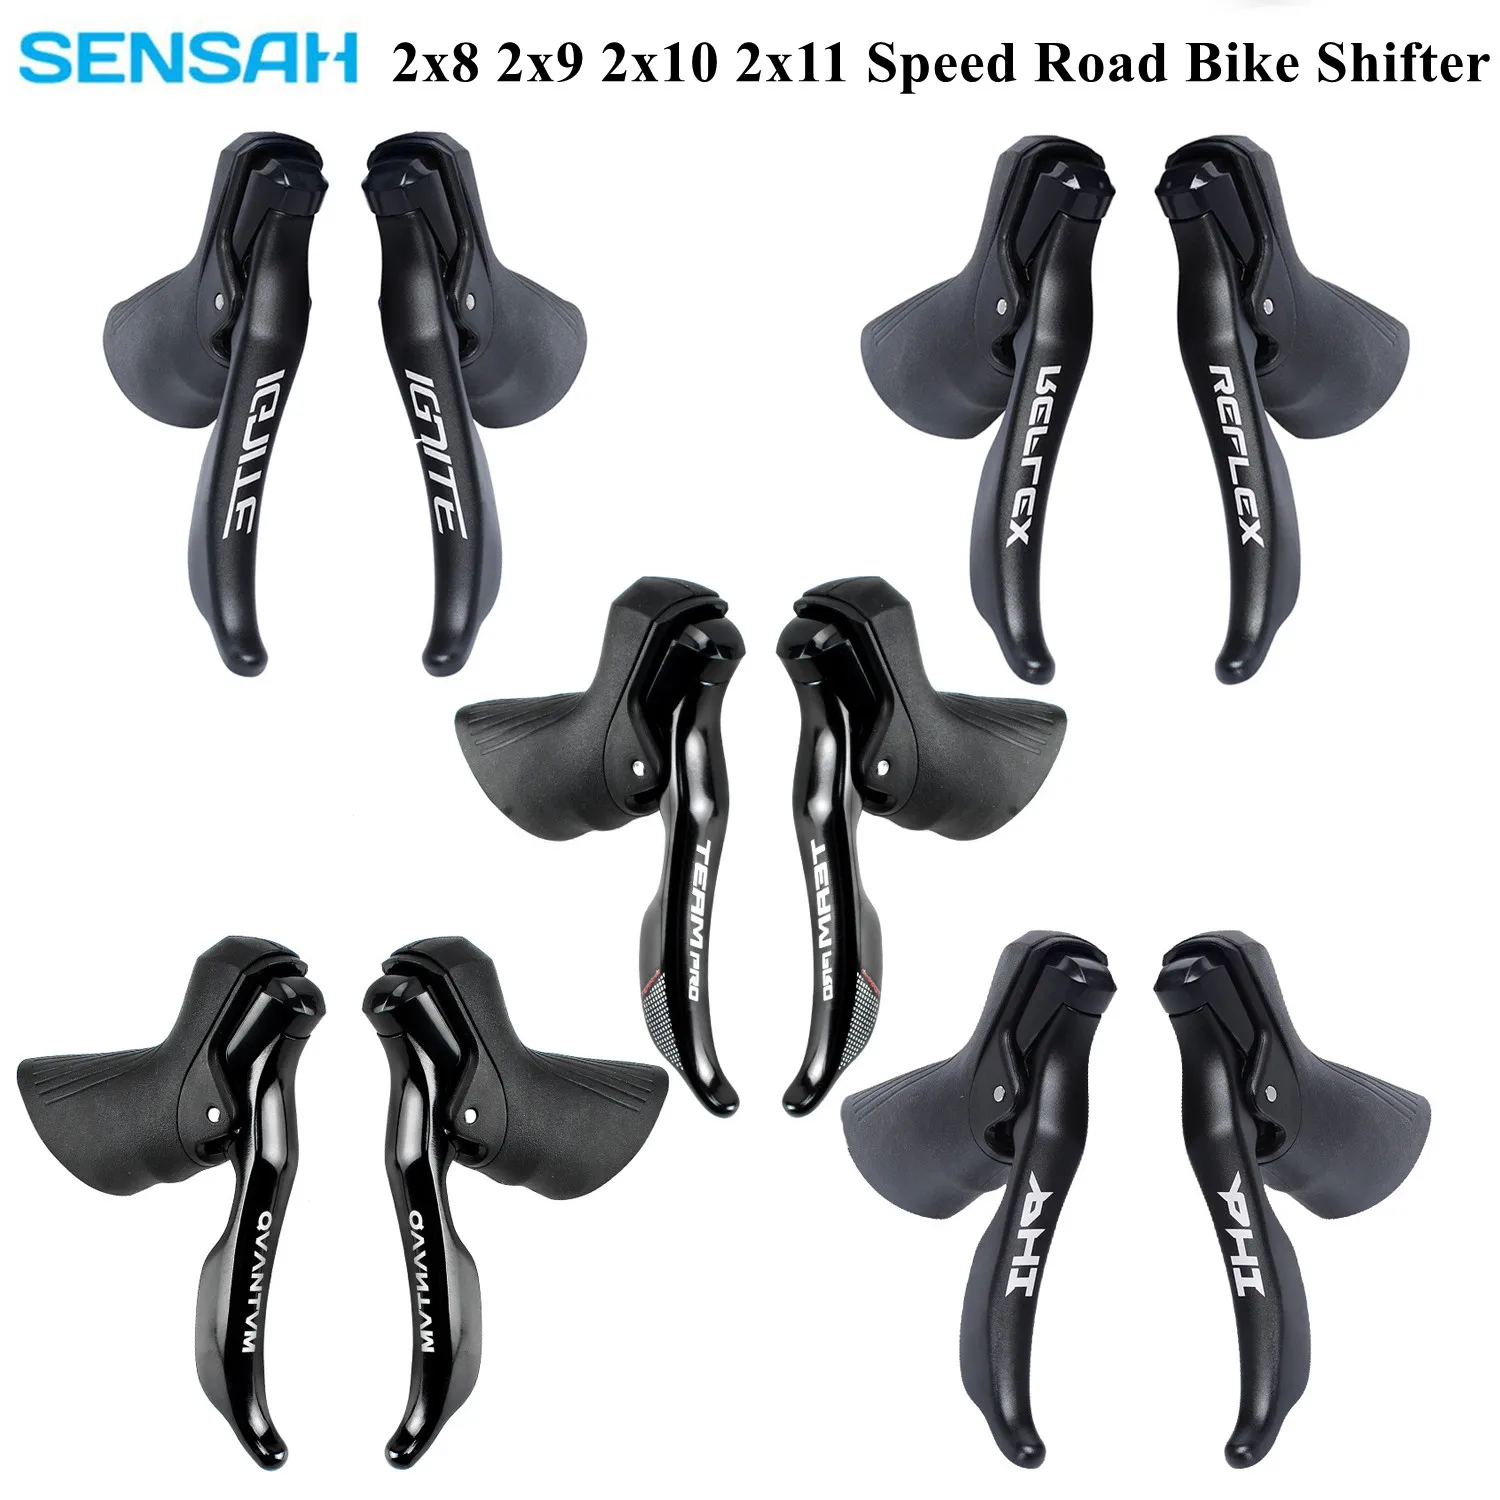 SENSAH Road Bike Shifters 2x8 2x9 2x10 2x11Speed Brake Lever 16/18/20/22 Speed Bicycle Derailleur For Shimano Sora Tiagra Claris